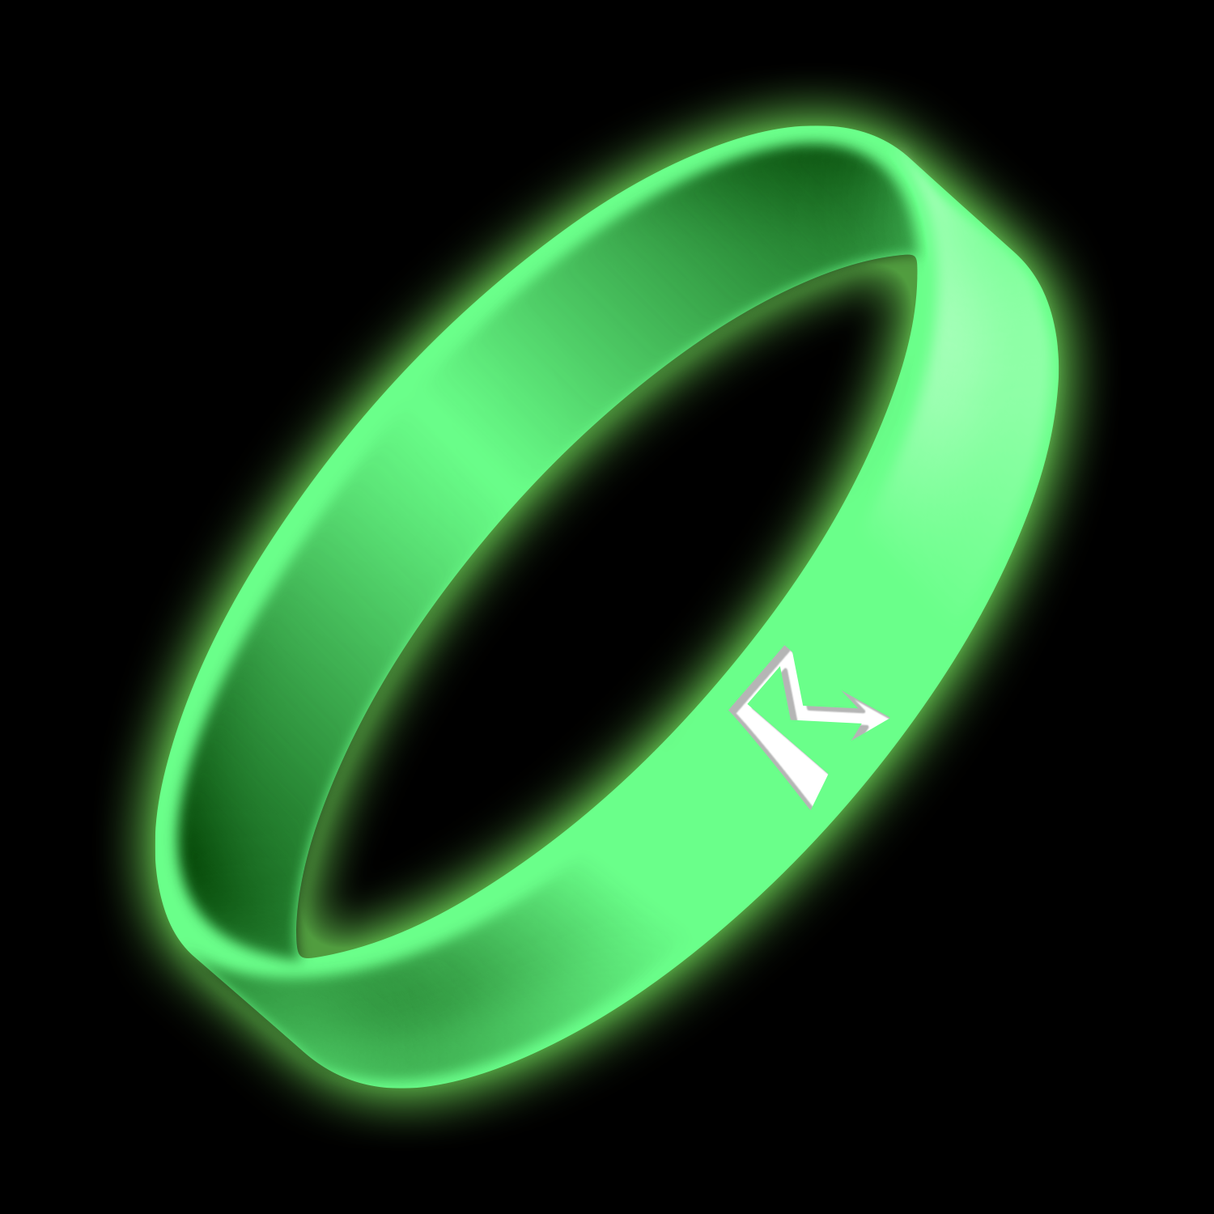 R Logo Wristband